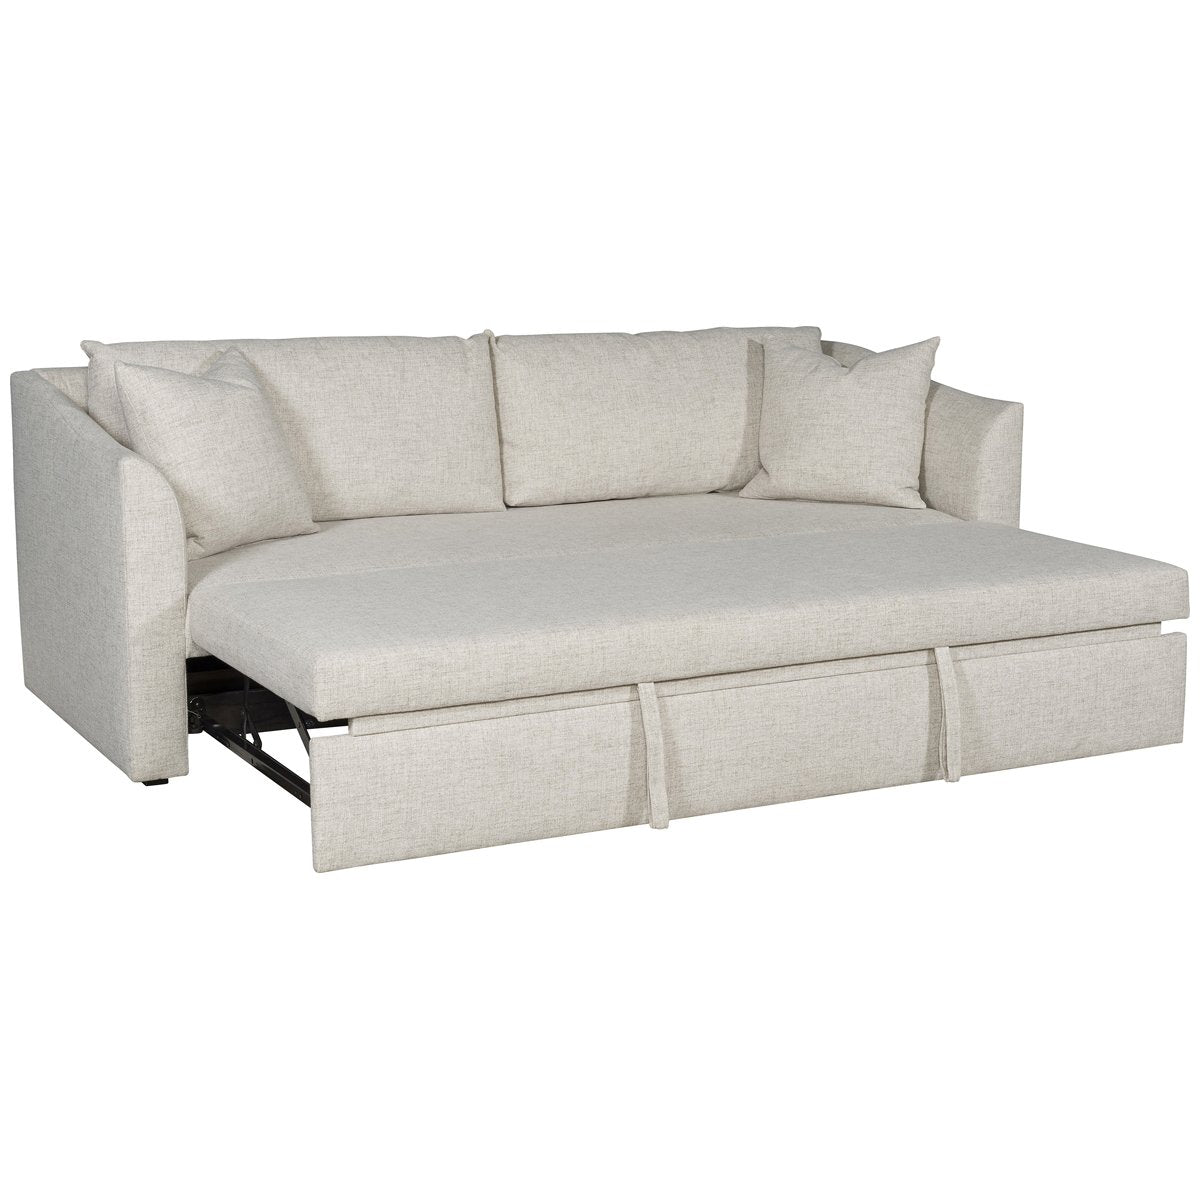 Vanguard Furniture Addie Pull Out Sleeper Sofa in Jack Linen